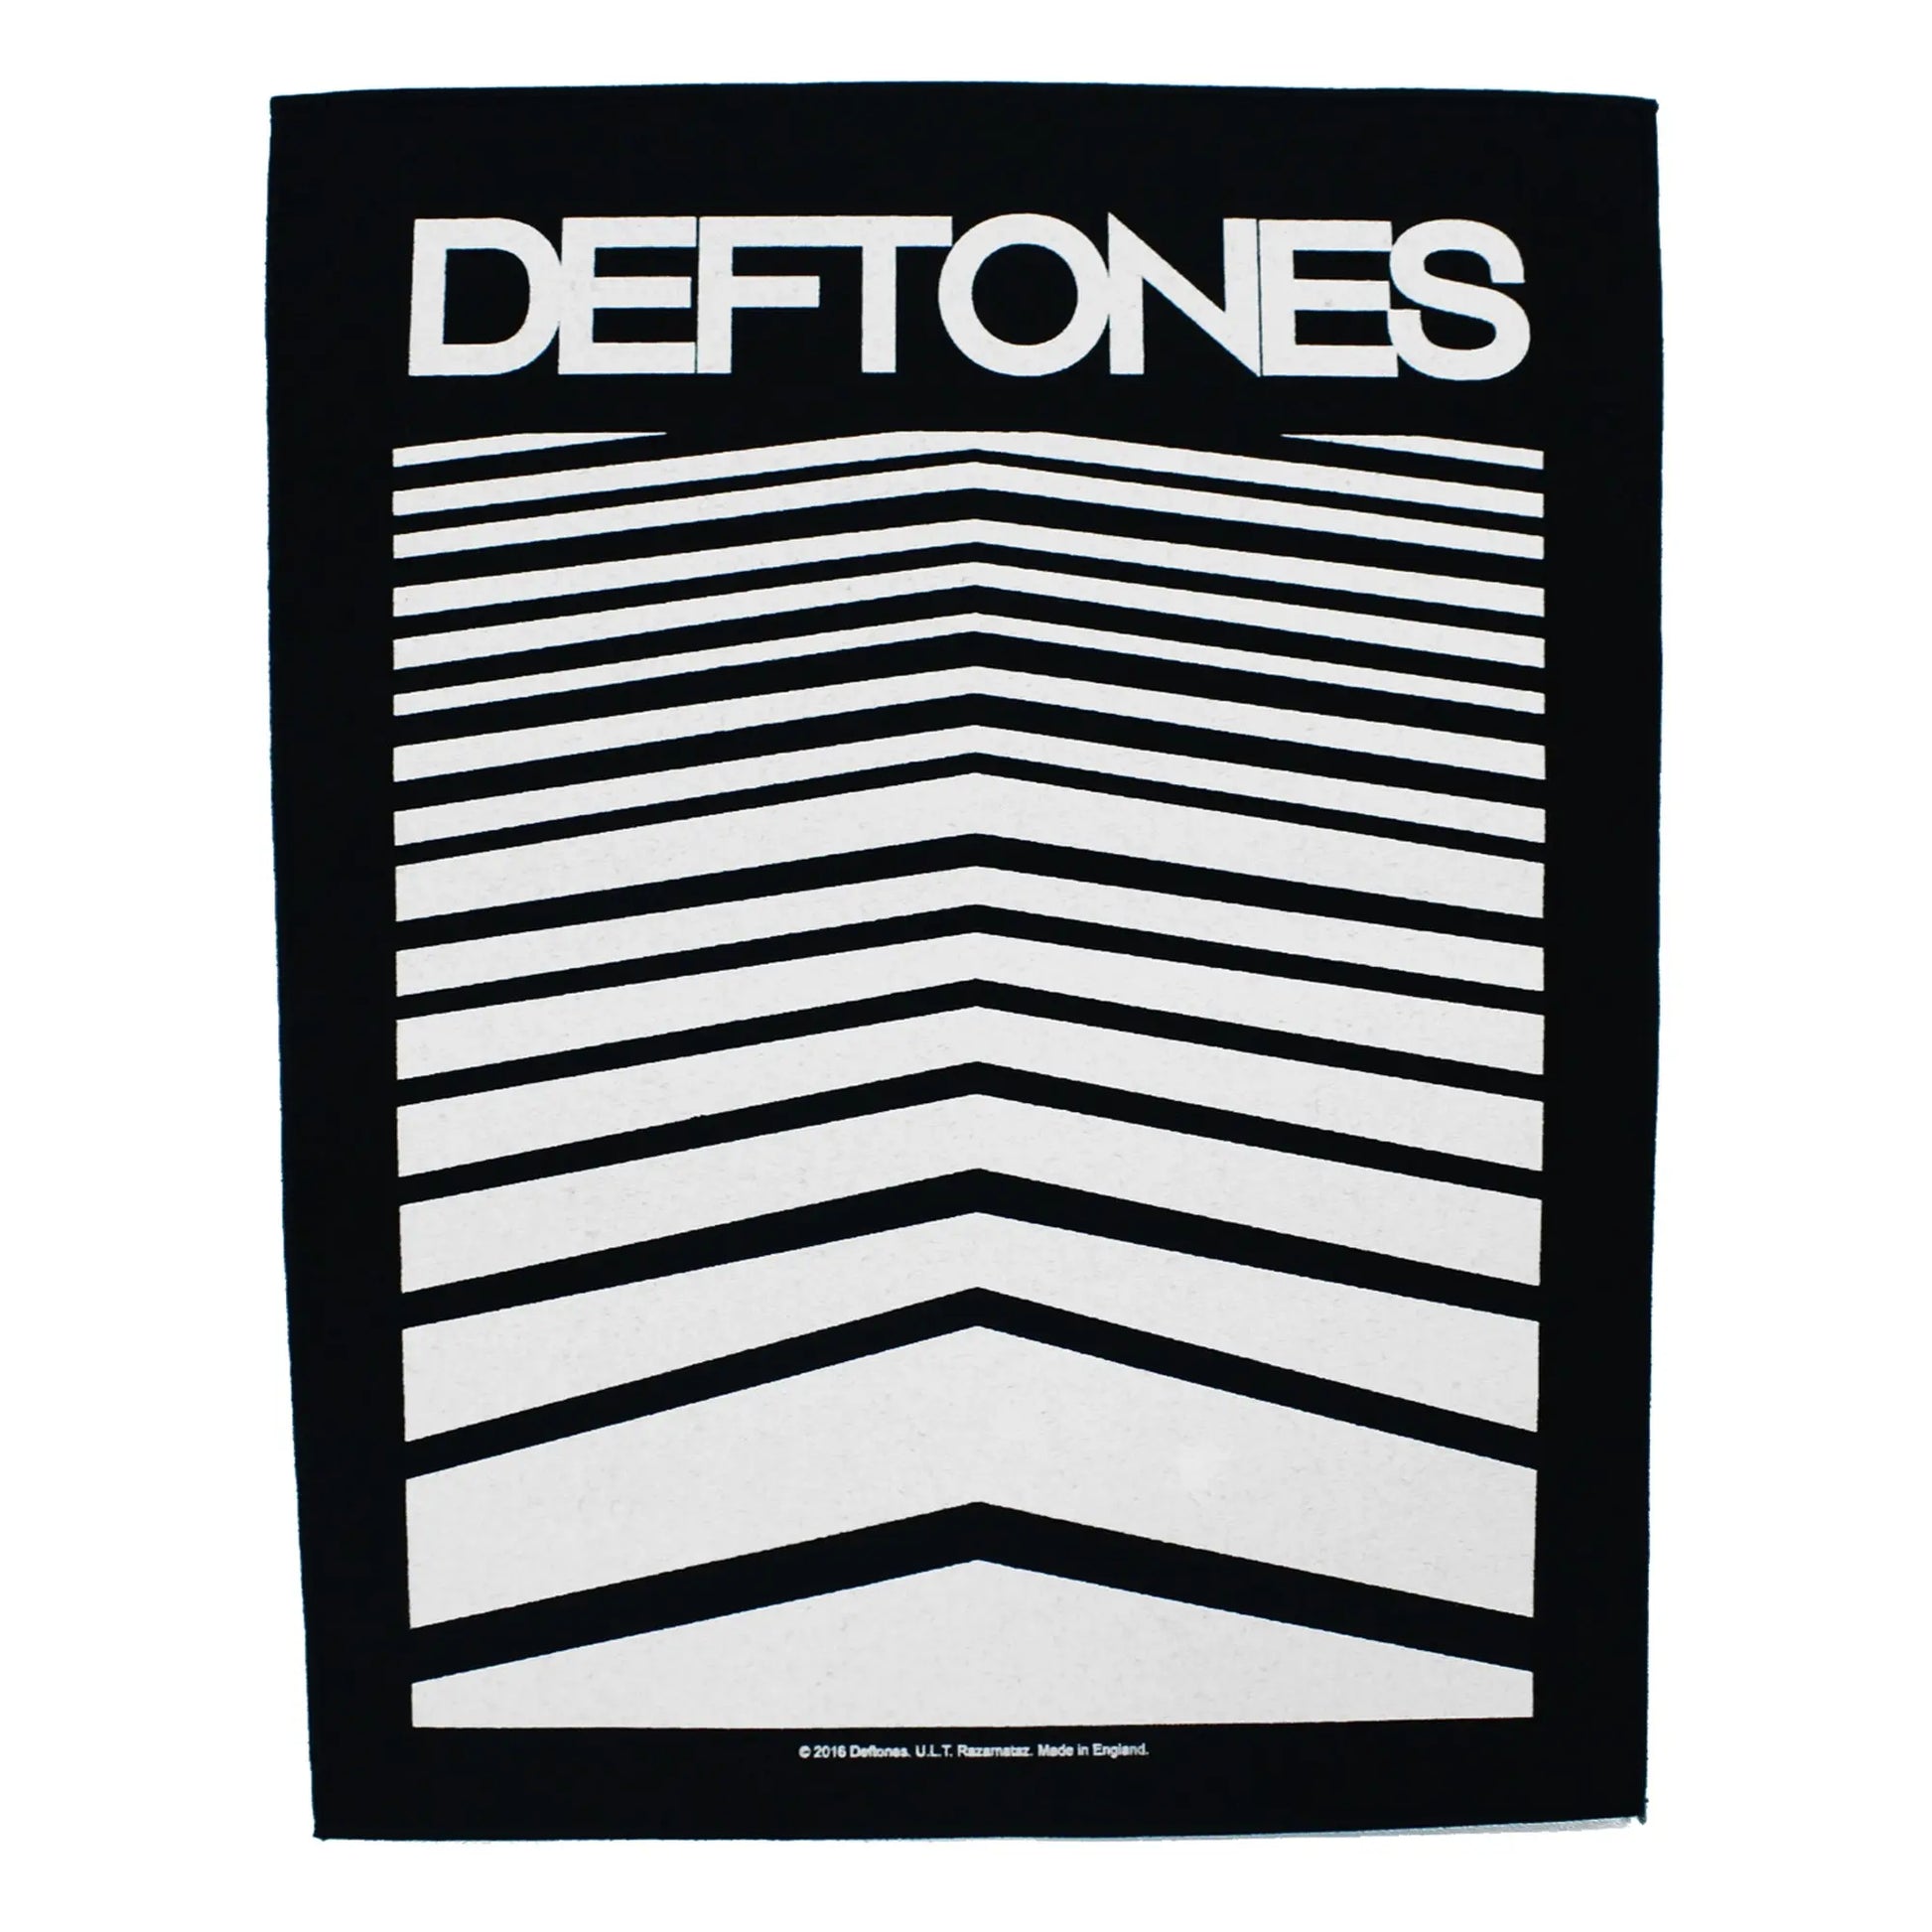 Deftones Broken Lines Back Patch California Alternative Rock XL DTG Printed Sew On